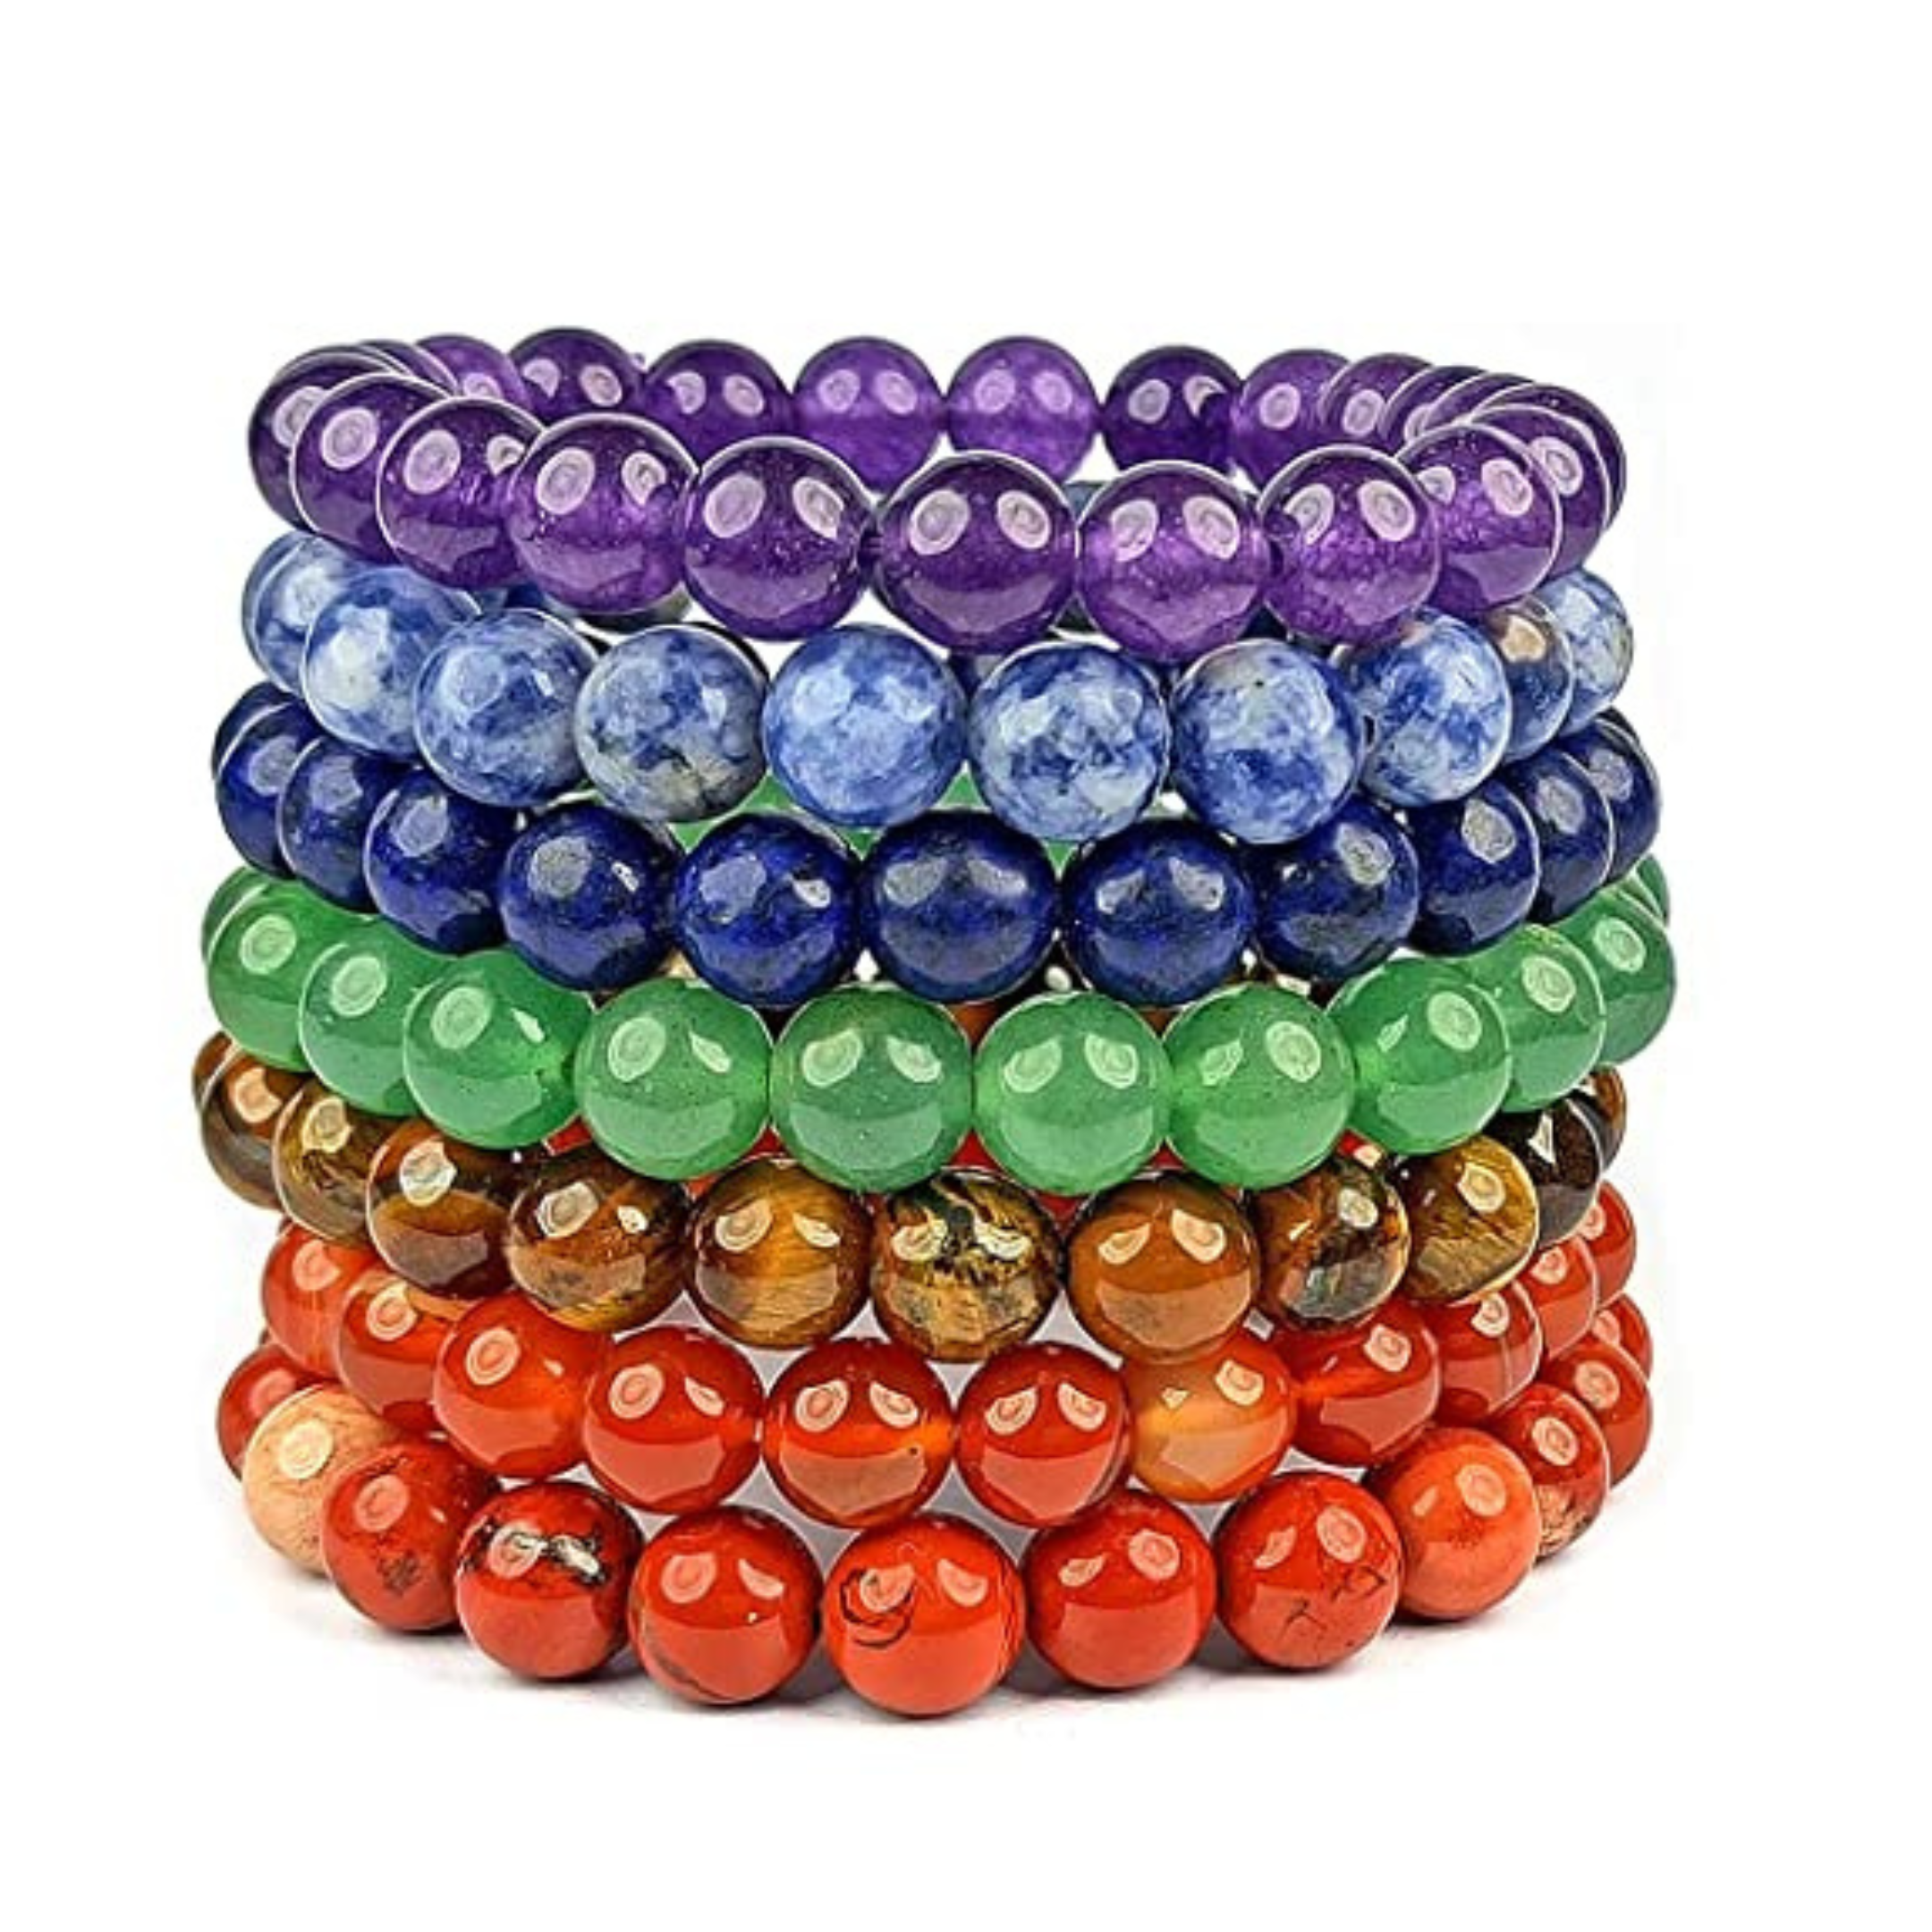 Crystal 7 chakra wholesale quartz stones bracelets beads wands bowls  crystal chakra healing necklace jewelry pendant